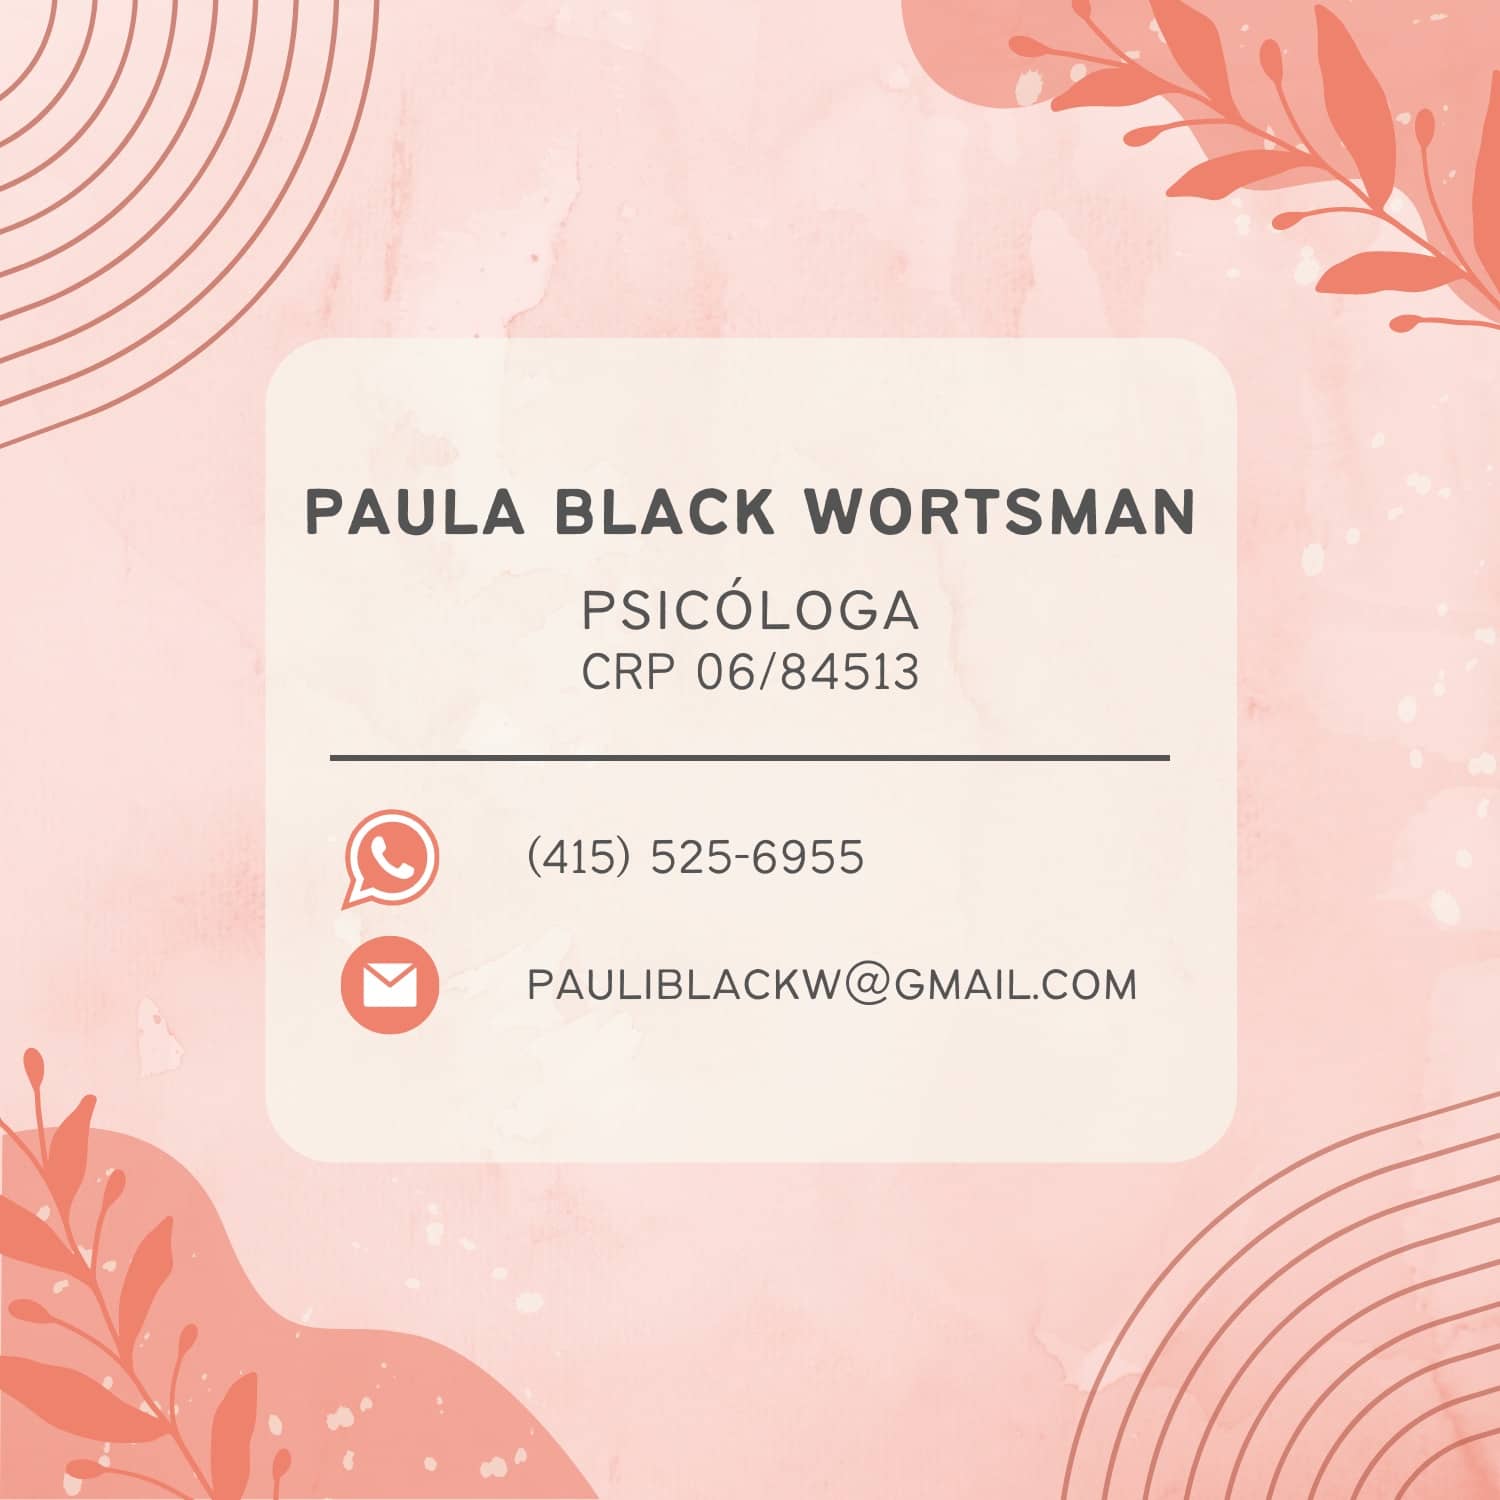 Paula Black Wortsman